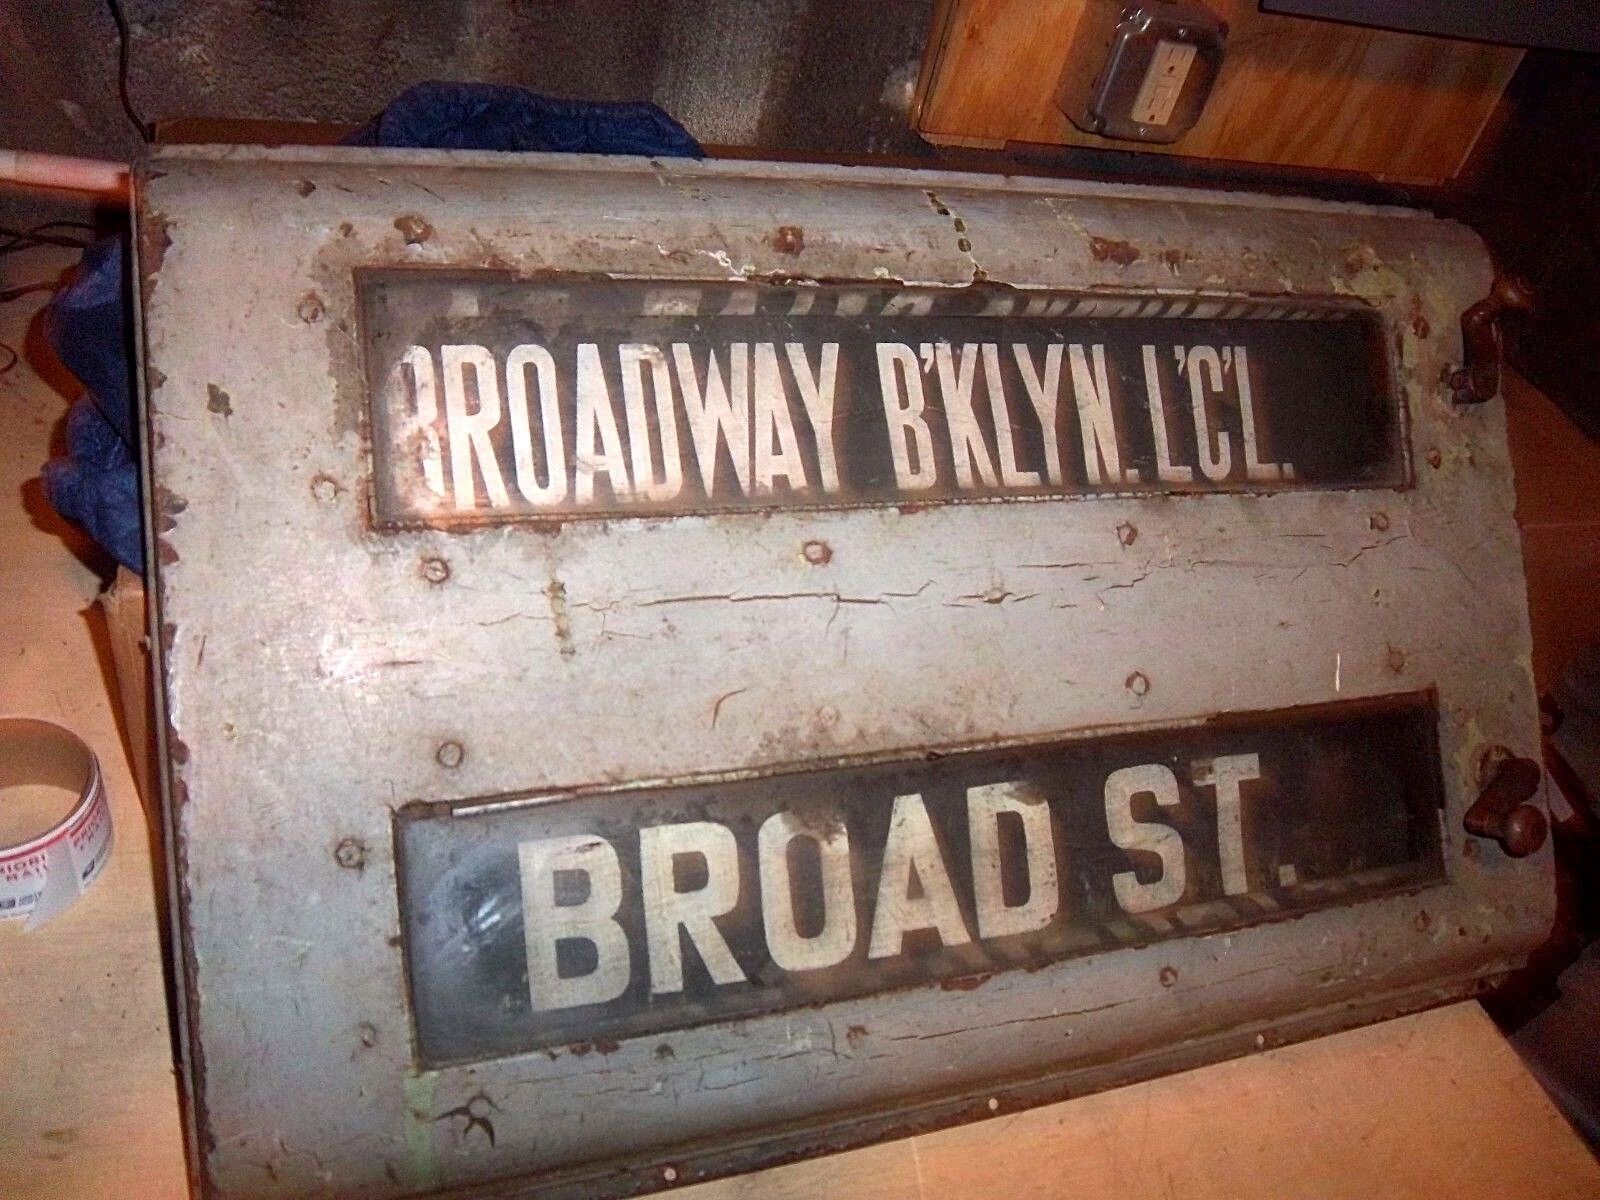 NY NYC SUBWAY ROLL SIGNS BMT BROADWAY BROOKLYN CANARSIE BRIGHTON BEACH BROAD ST.